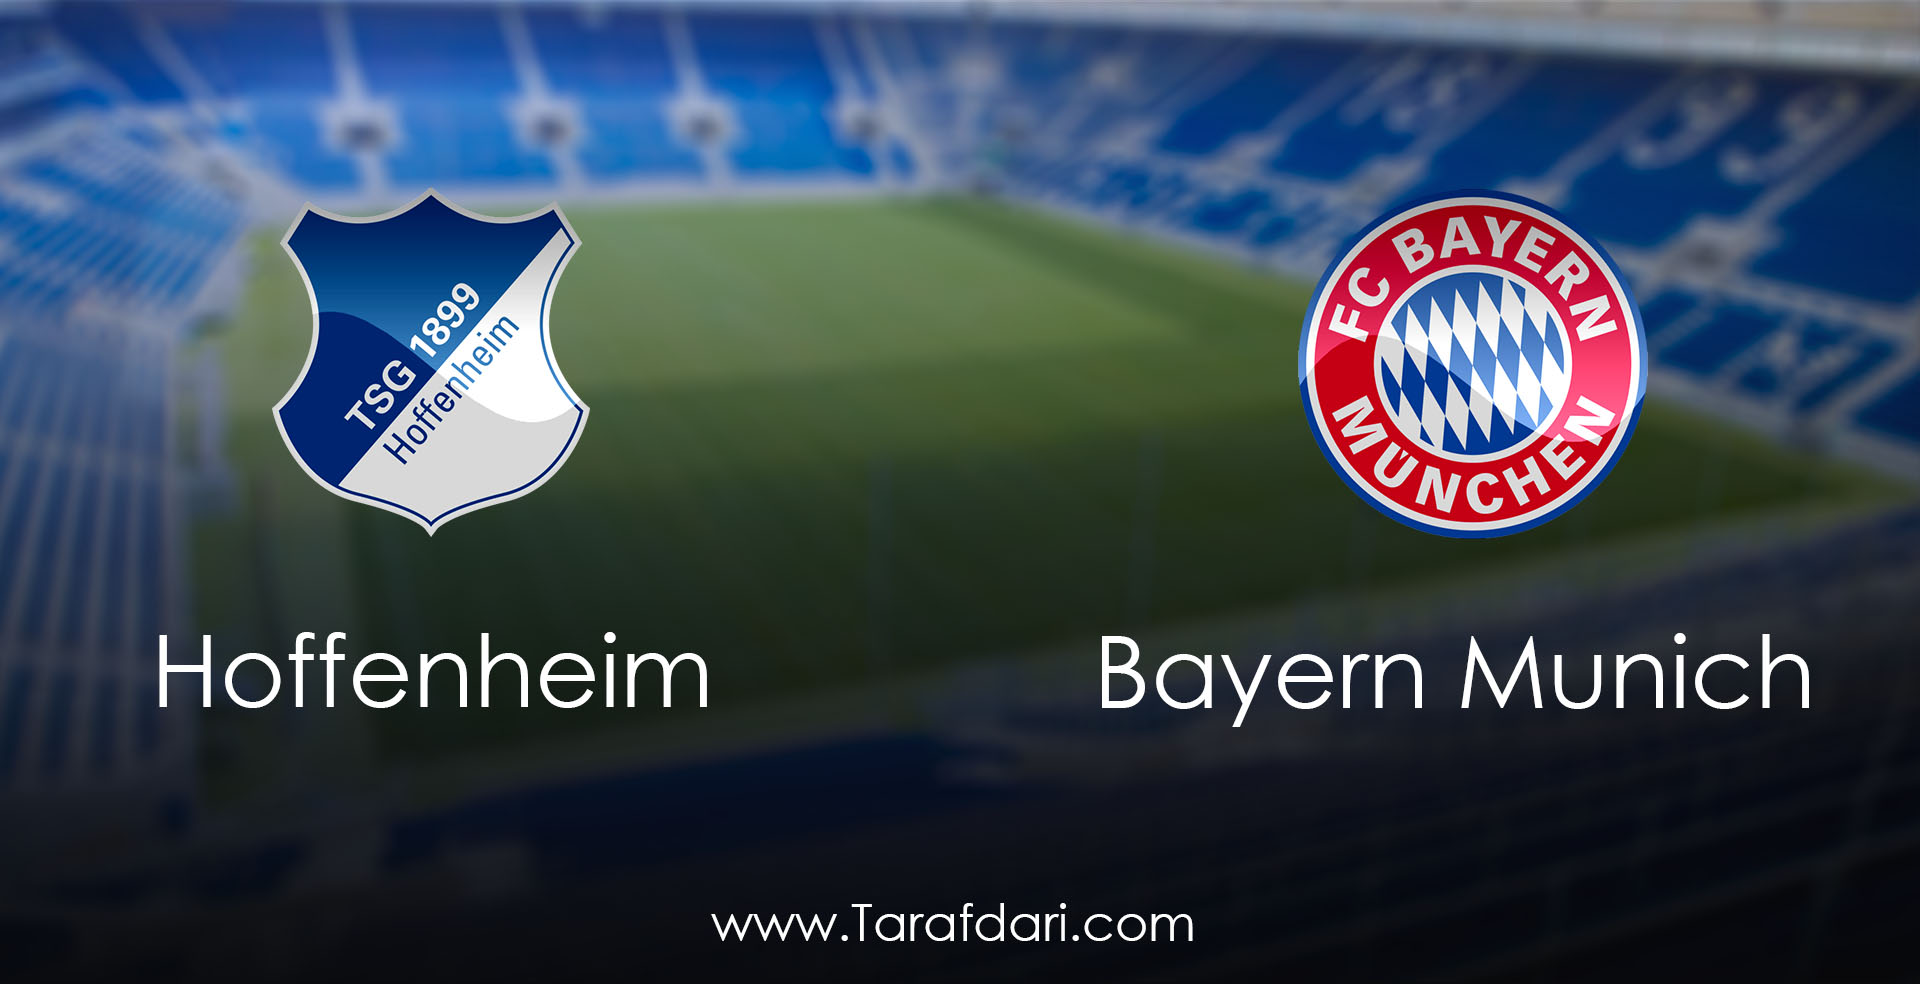 Hoffenheim vs Bayern Munich-هوفنهایم و بایرن مونیخ-هفته بیست و هفتم-بوندس لیگا آلمان